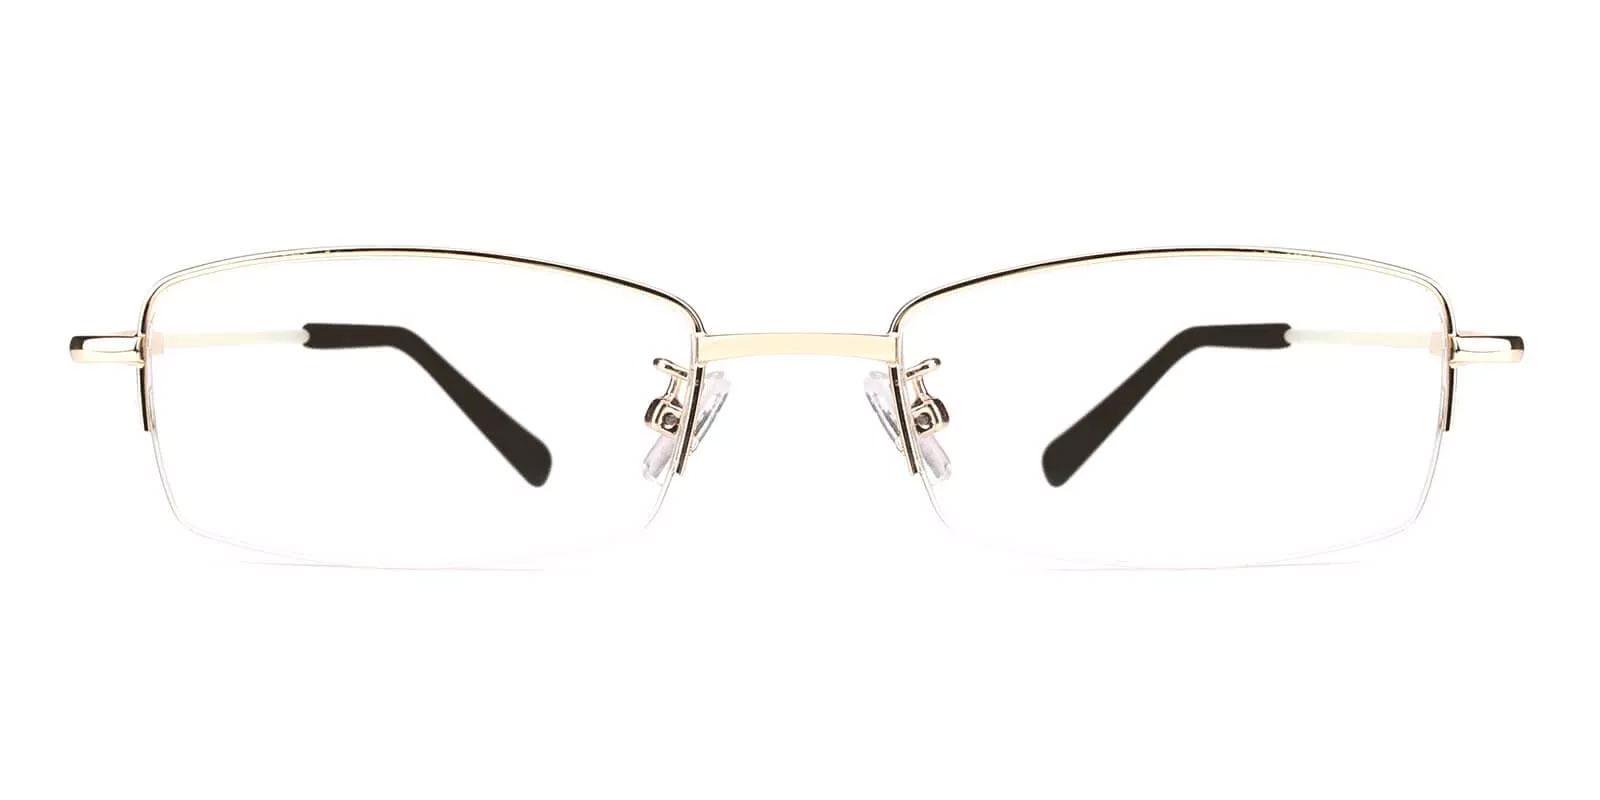 Benjamin Gold Metal Eyeglasses , NosePads Frames from ABBE Glasses